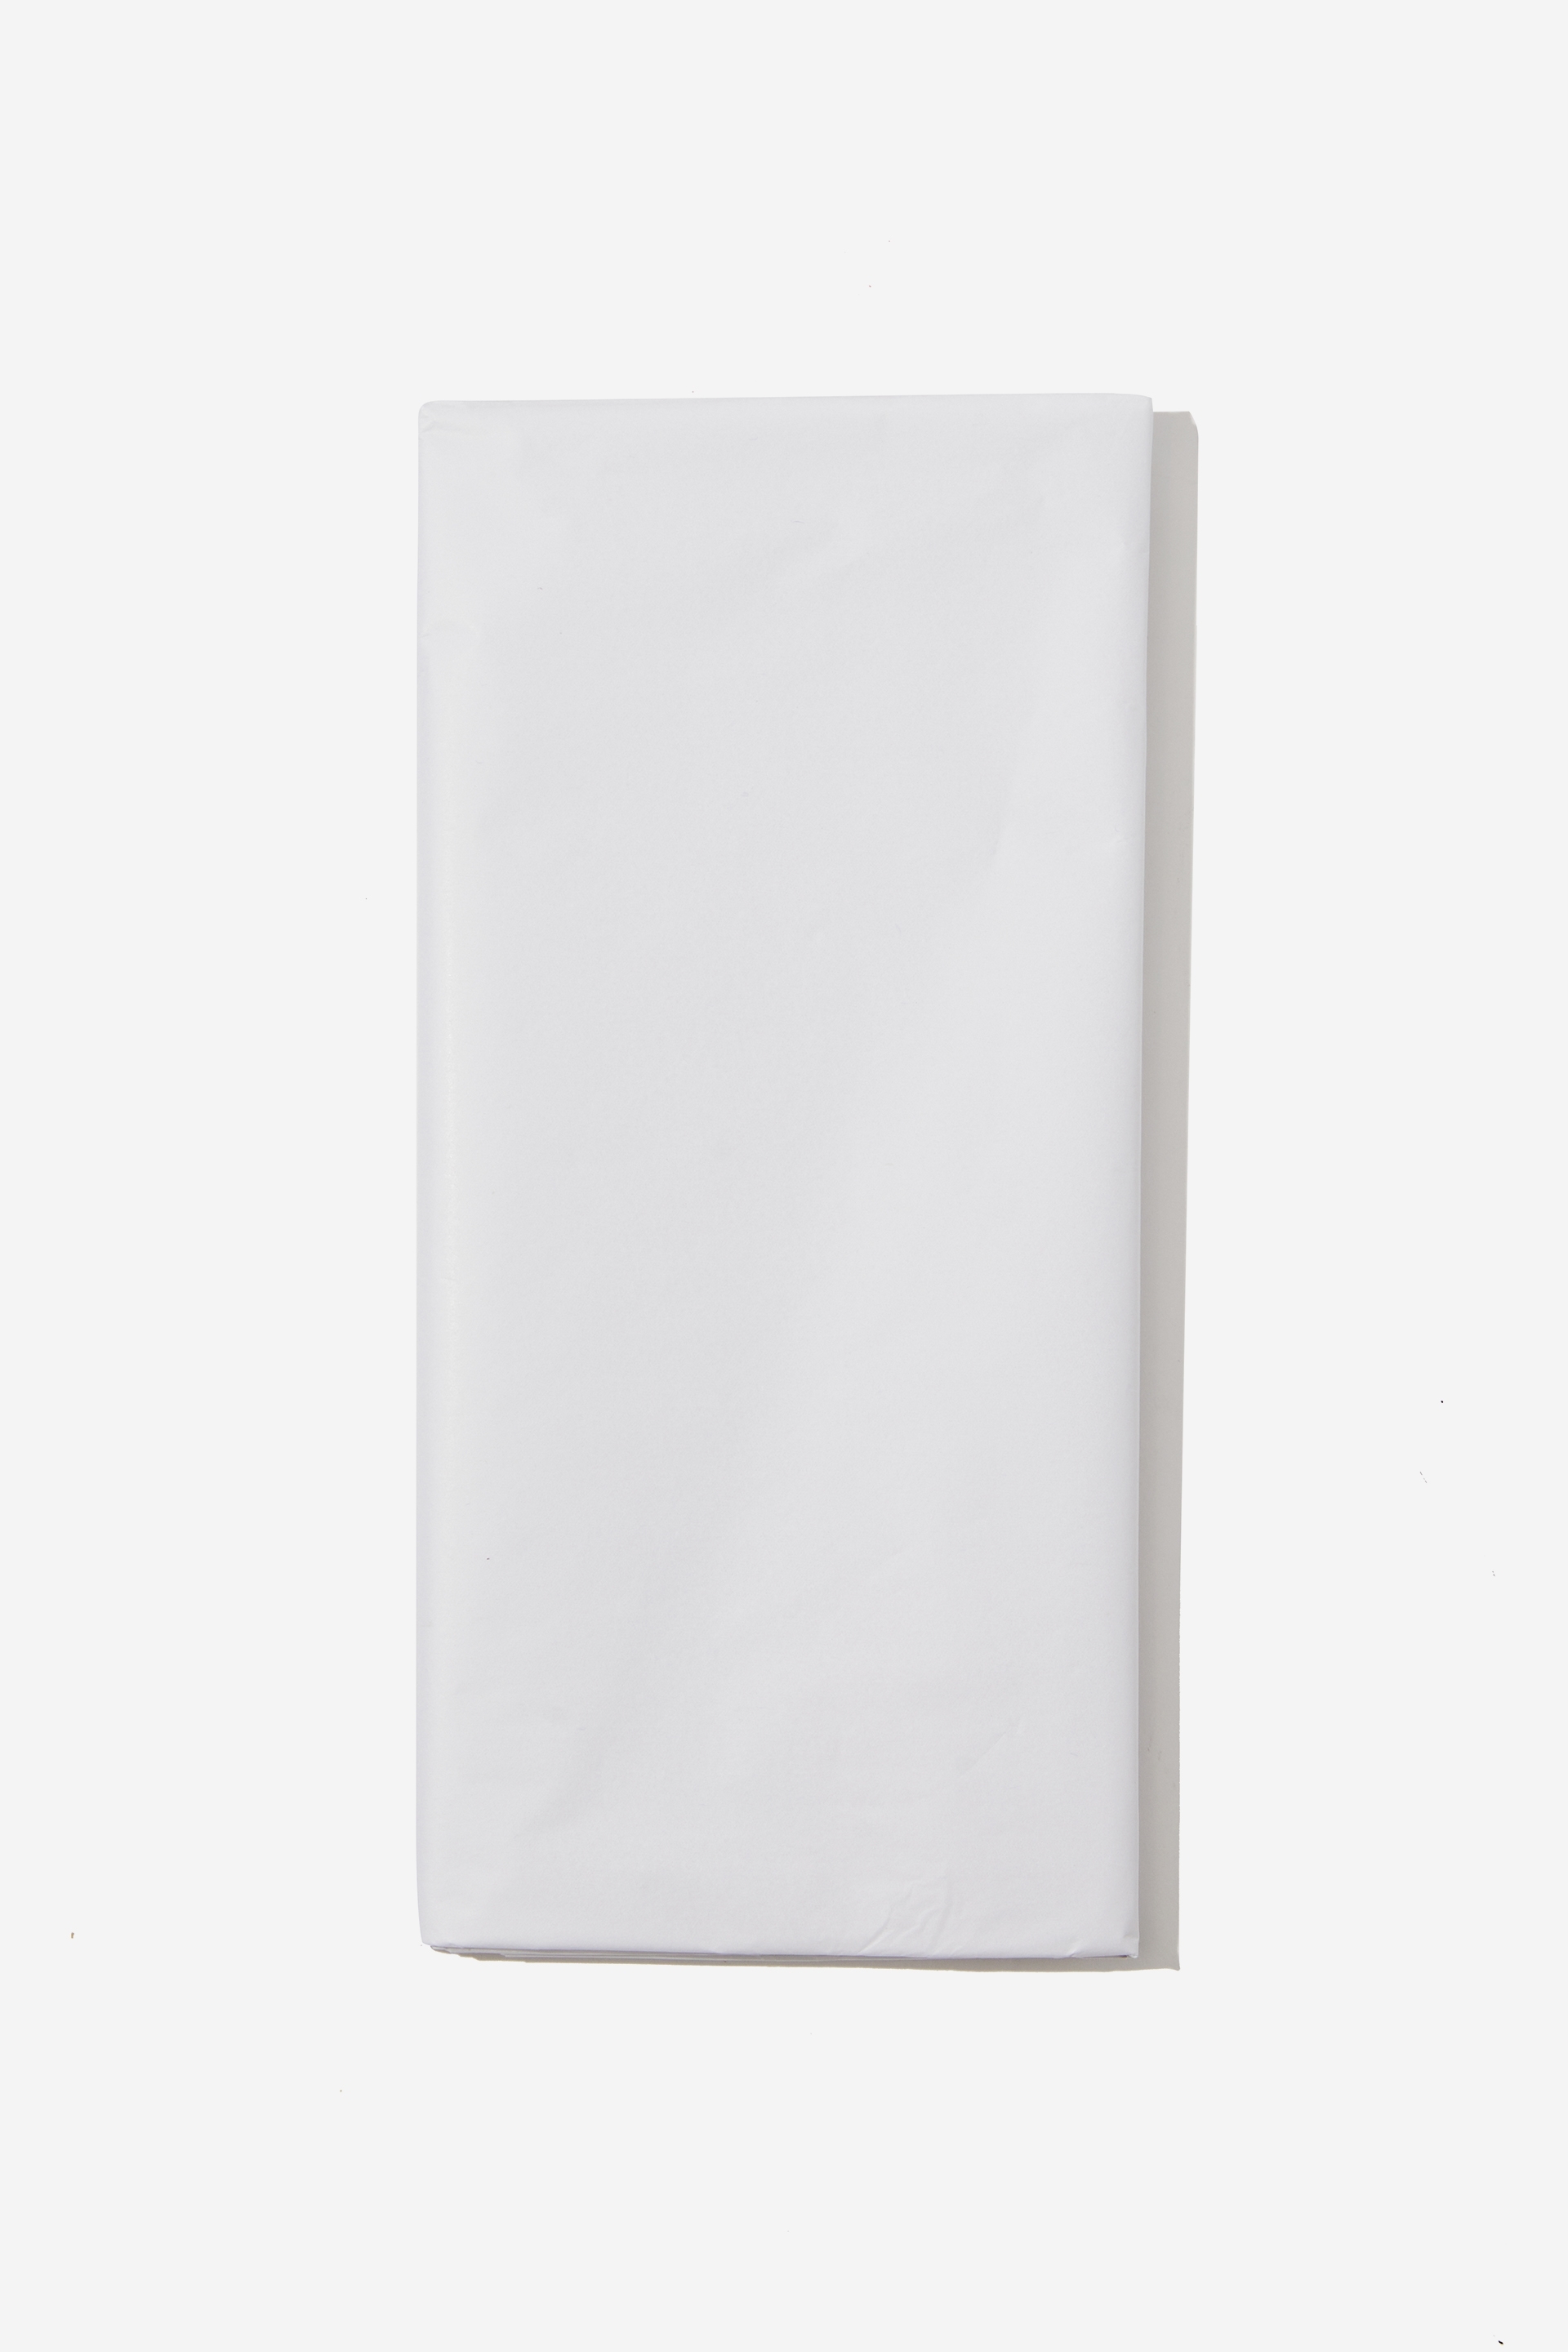 Typo - Tissue Paper - White